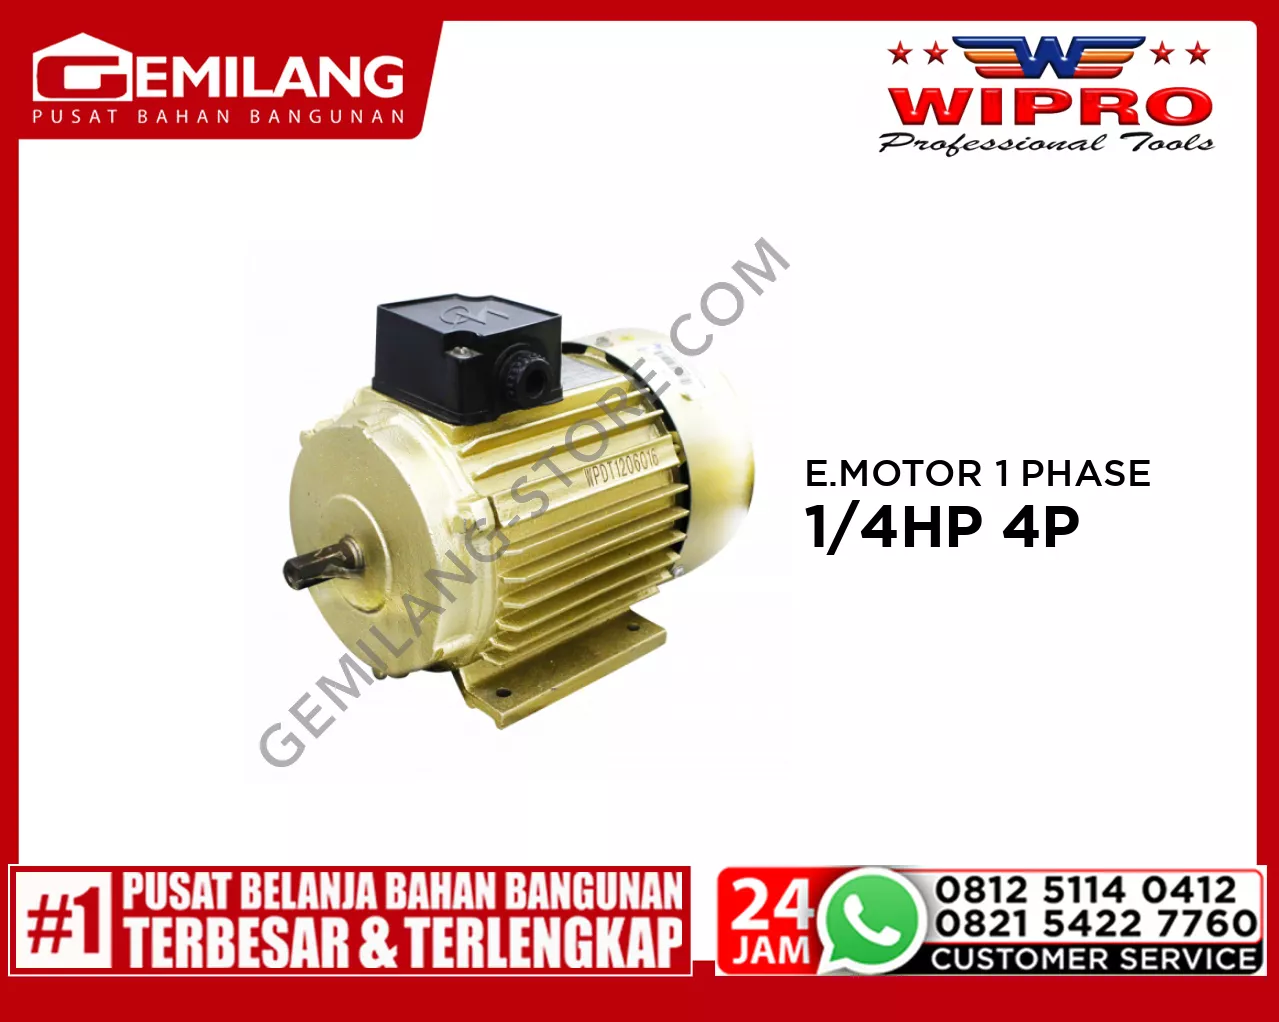 WIPRO ELECTROMOTOR 1 PHASE 1/4HP 4P (FOAM)